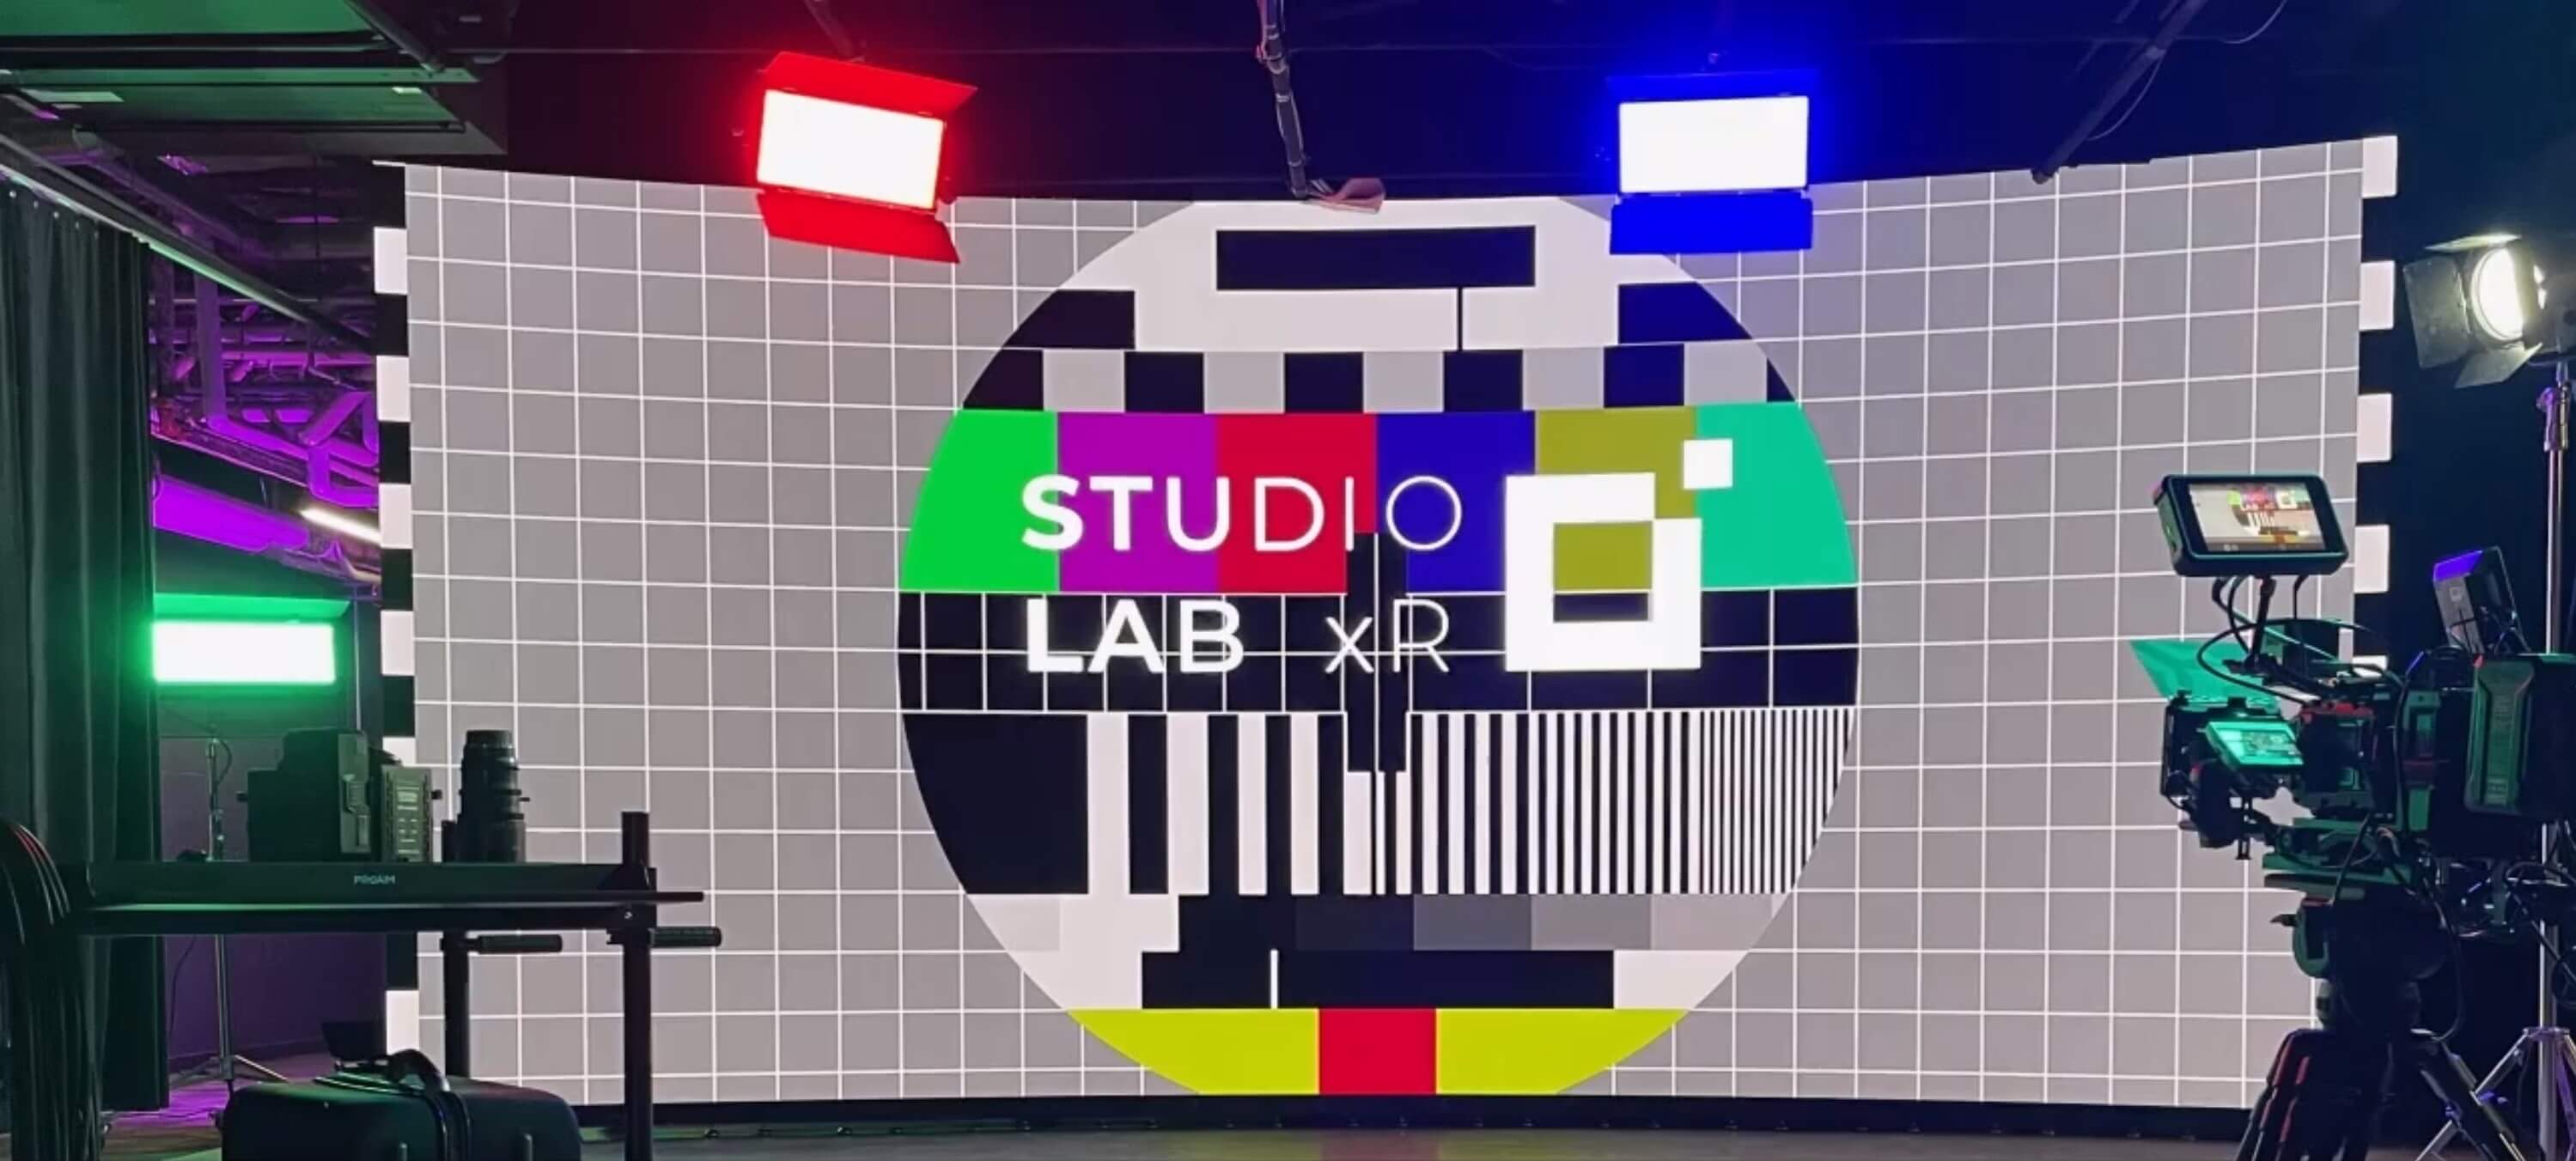 studio lab xr new media manitoba by APG media